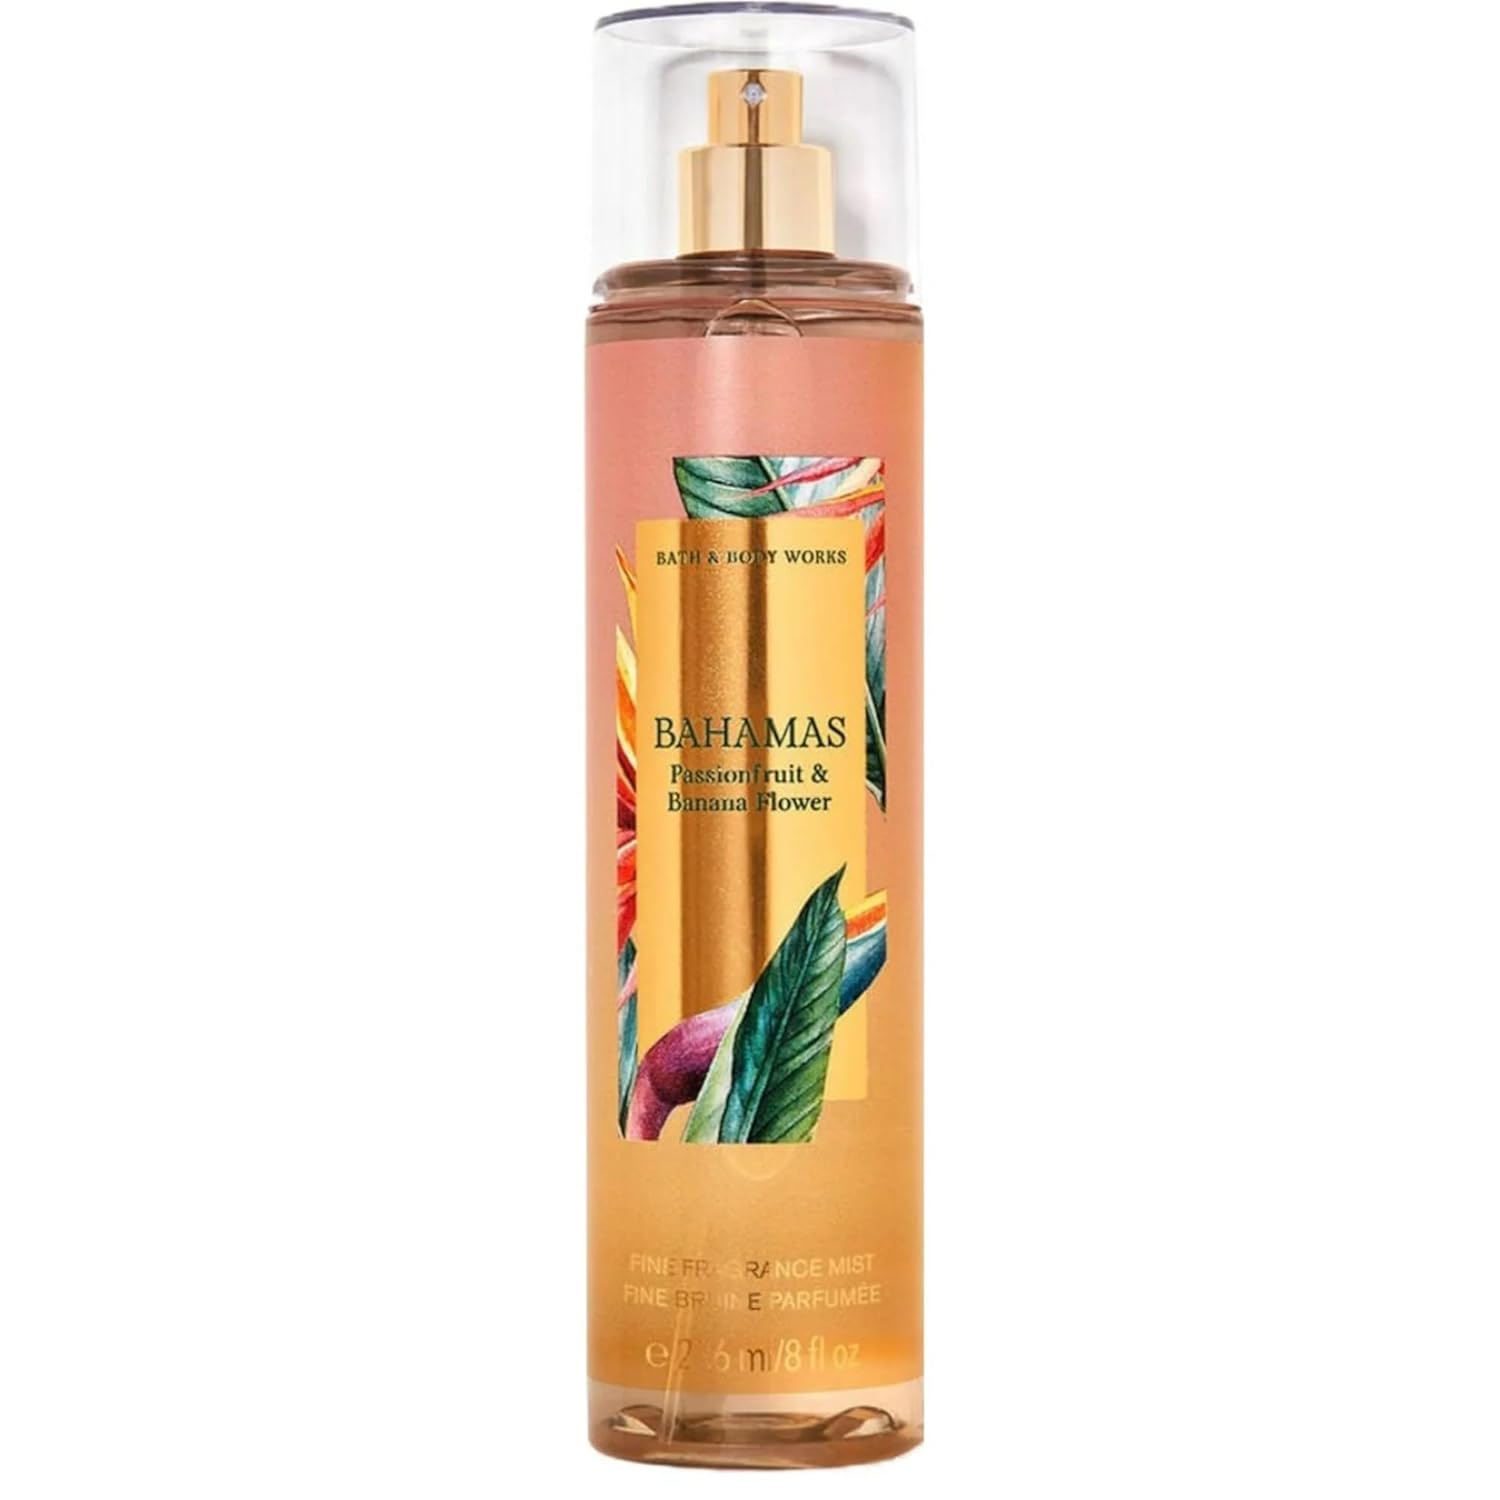 Bath & Body Works Fine Fragrance Body Spray Mist 8 fl oz / 236 mL (Bahamas  Passionfruit & Banana Flower)